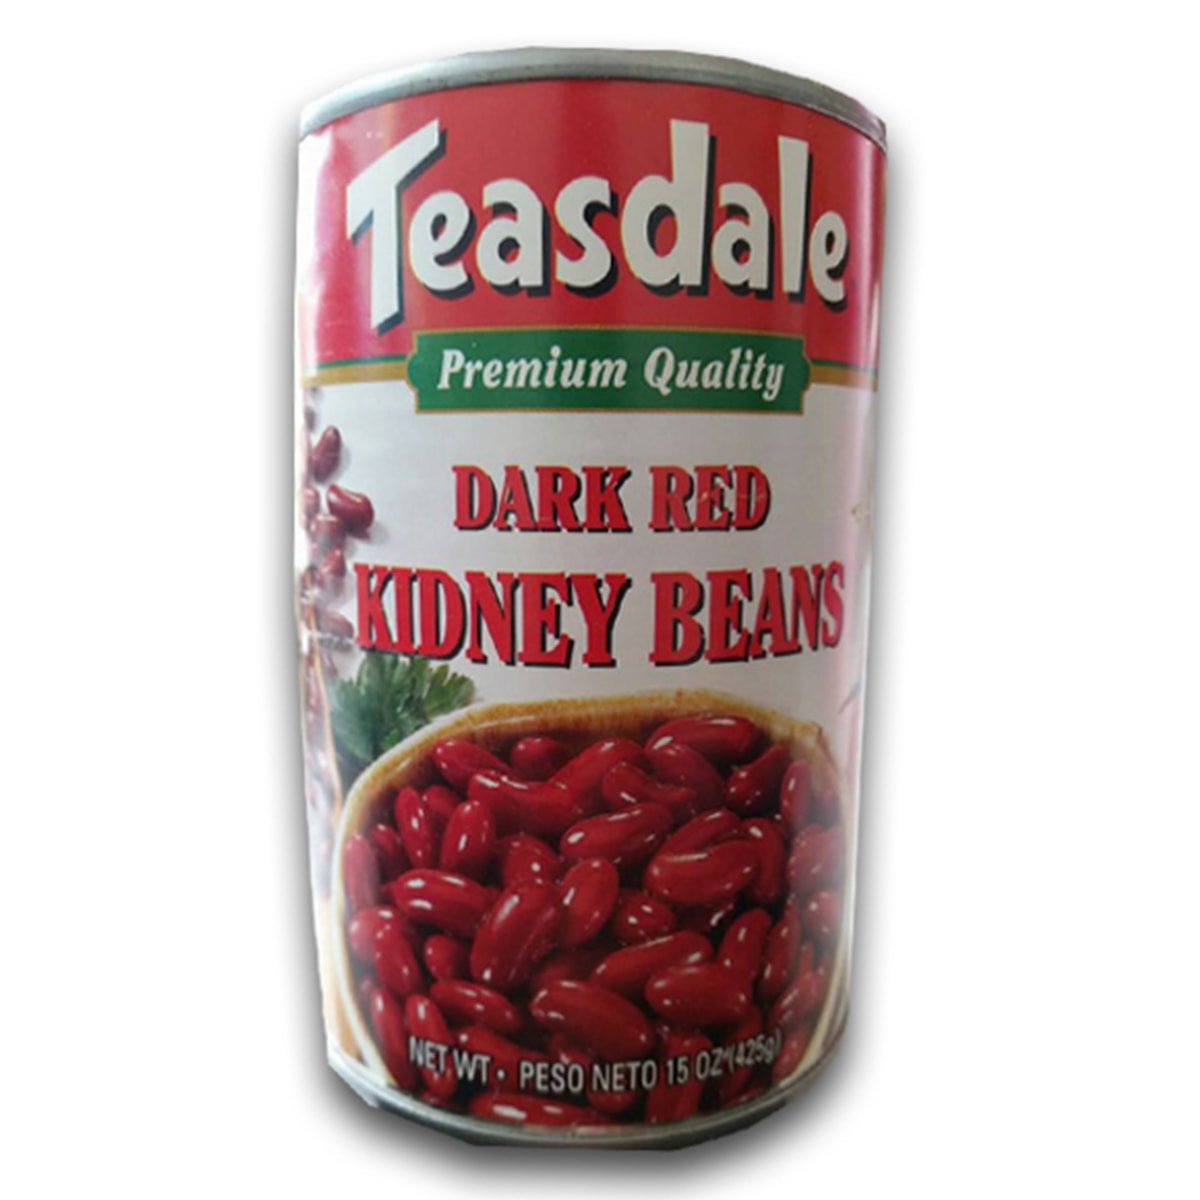 Buy Teasdale Dark Red Kidney Beans (Premium Quality) - 425 gm